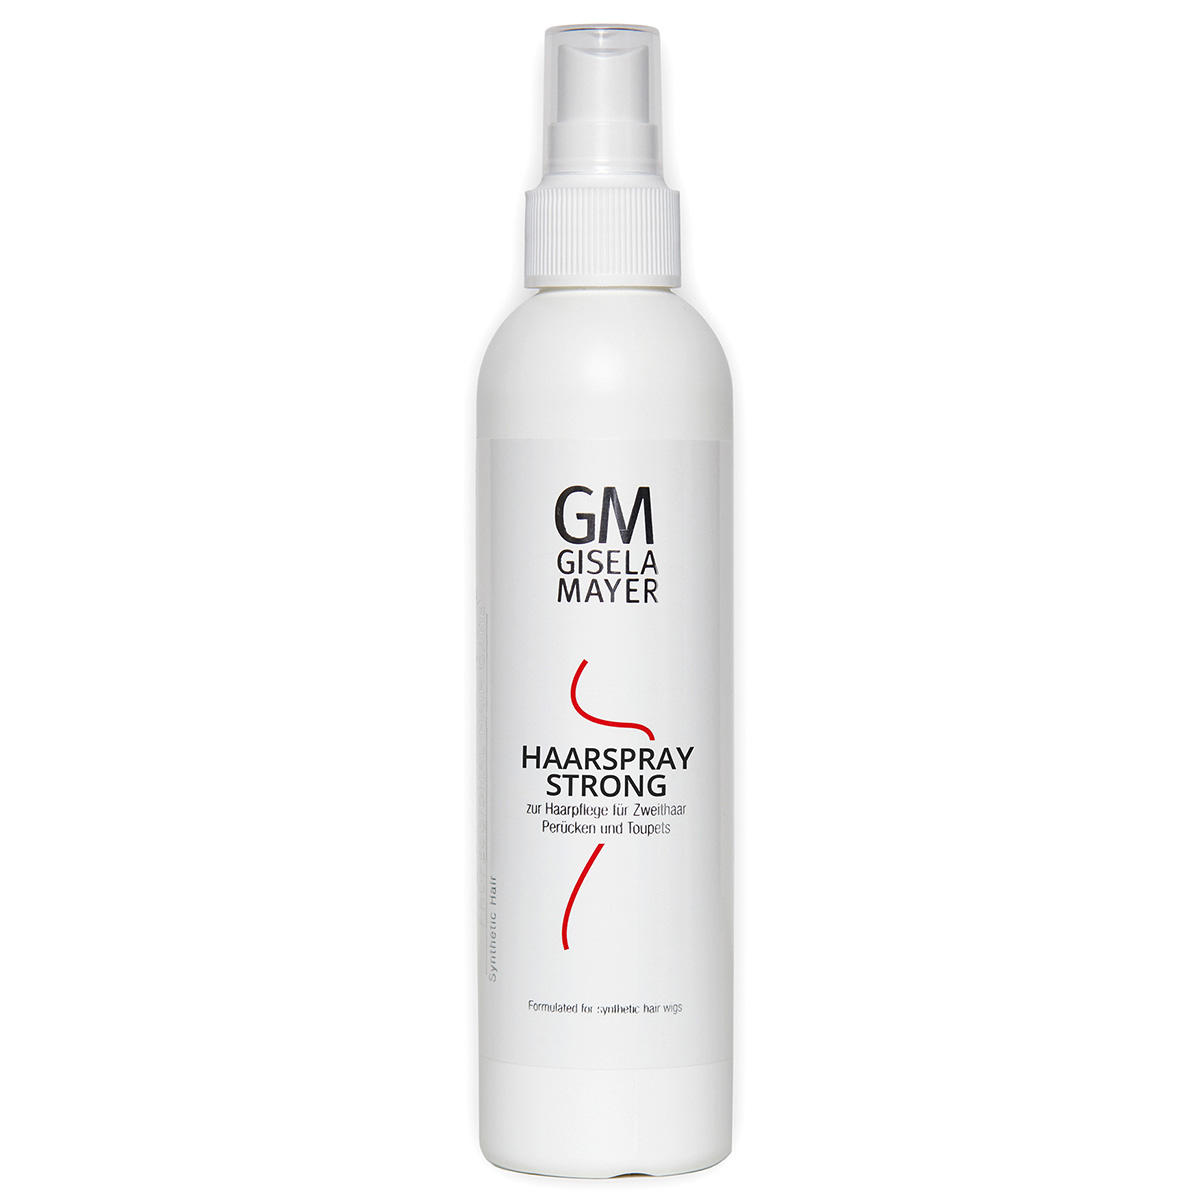 Gisela Mayer Hairspray Strong for synthetic hair 200 ml - 1